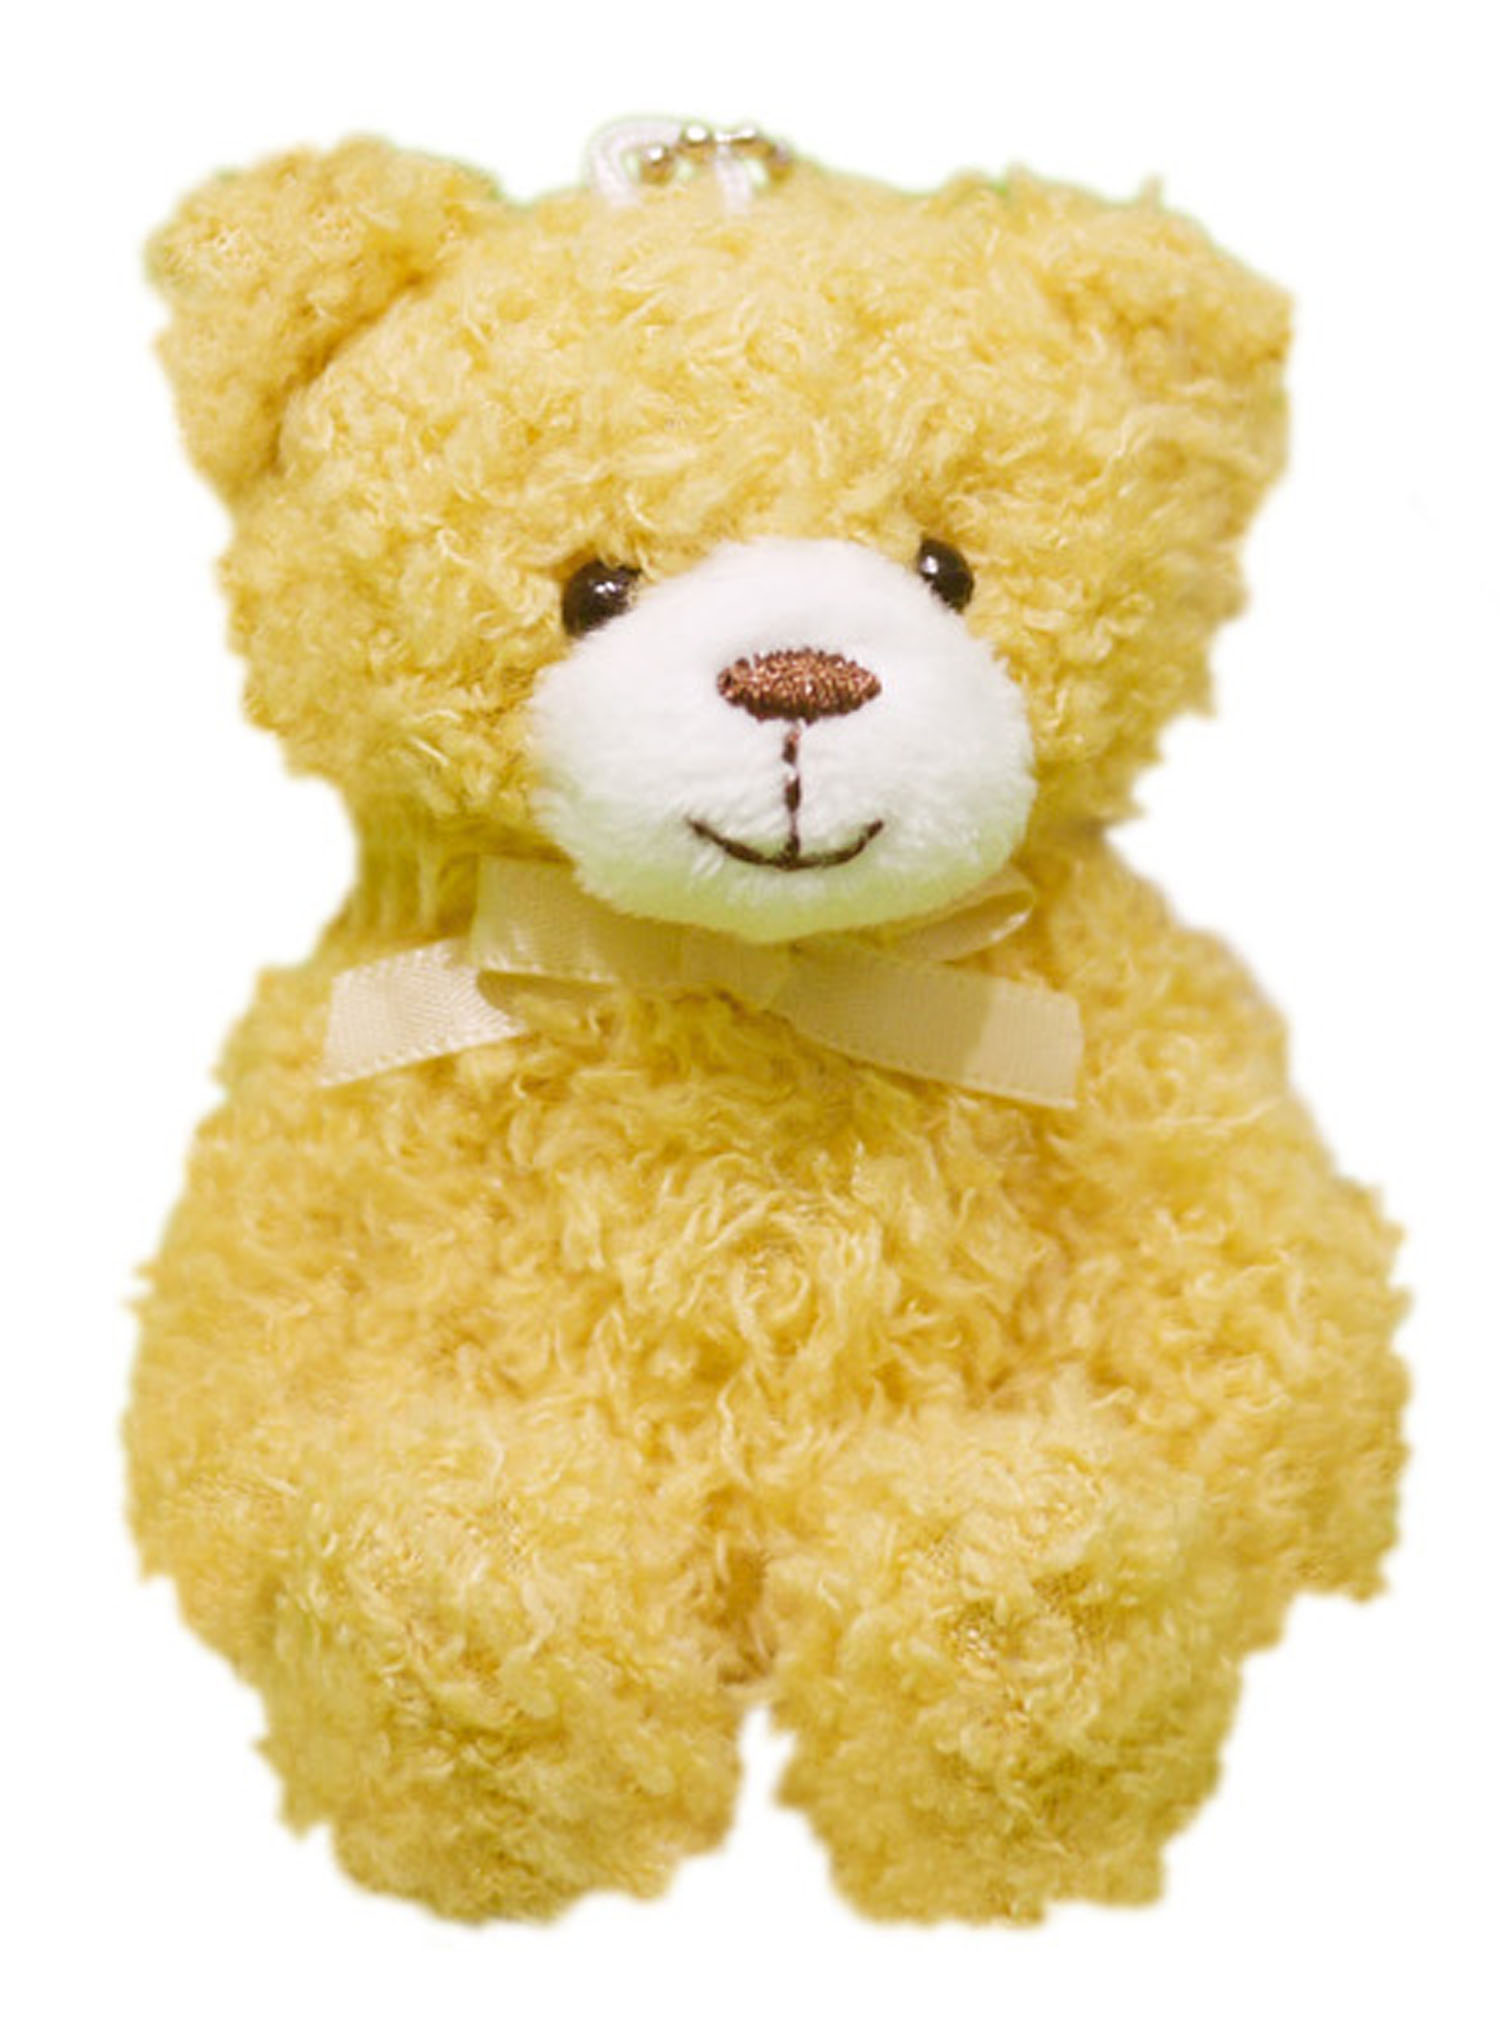 Mini mascot with ball chain, ribbon bear, yellow